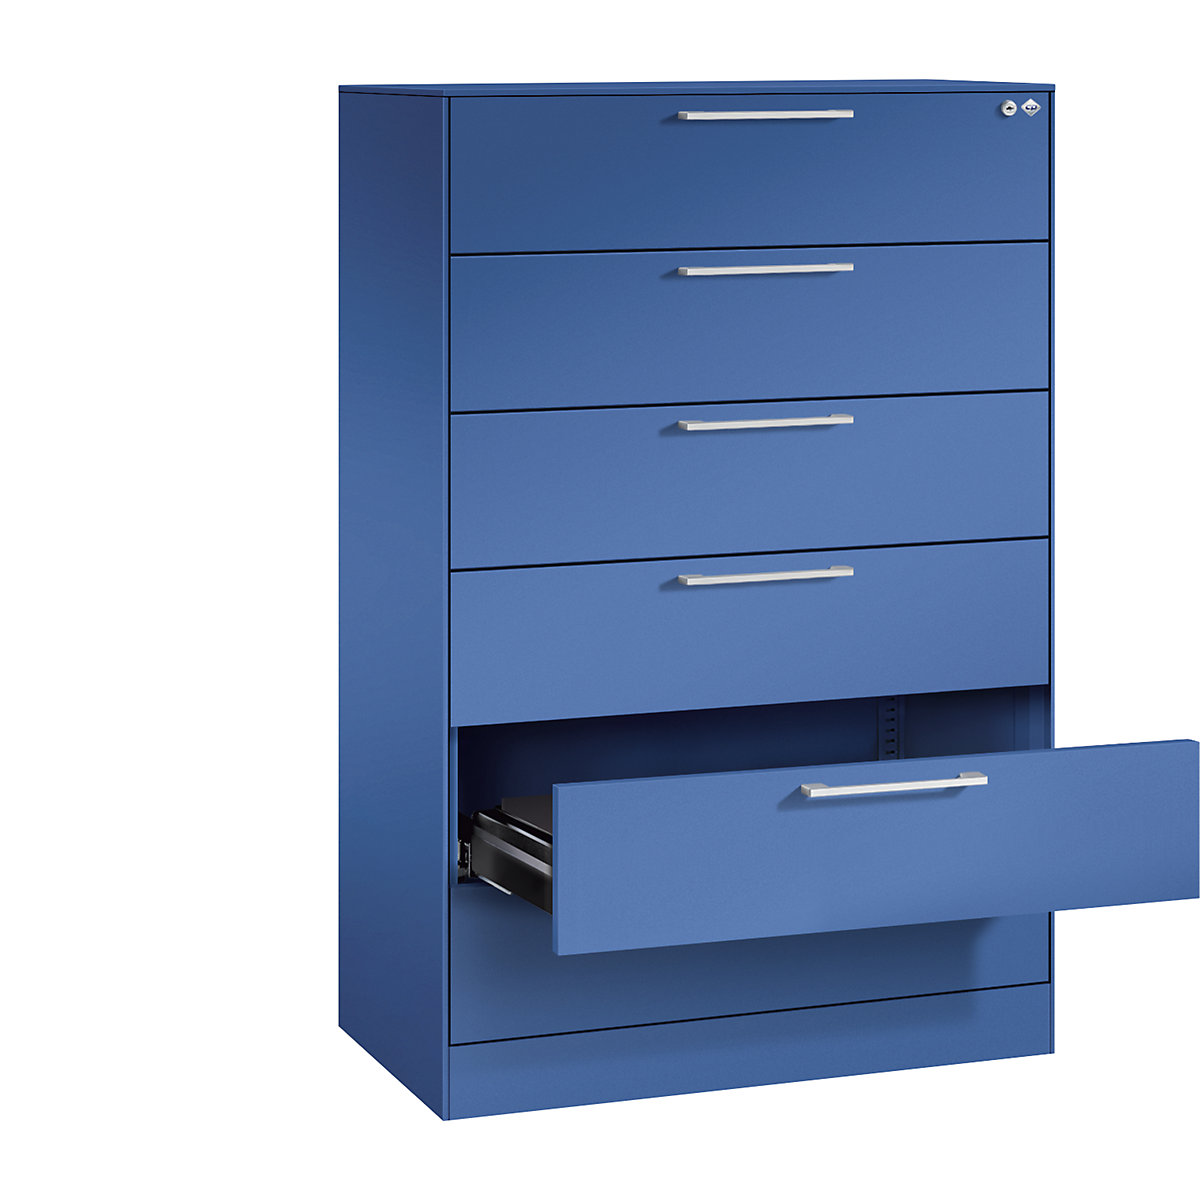 Kartotéková skříň ASISTO – C+P, výška 1292 mm, se 6 výsuvy, DIN A5 na šířku, enciánová modrá/enciánová modrá